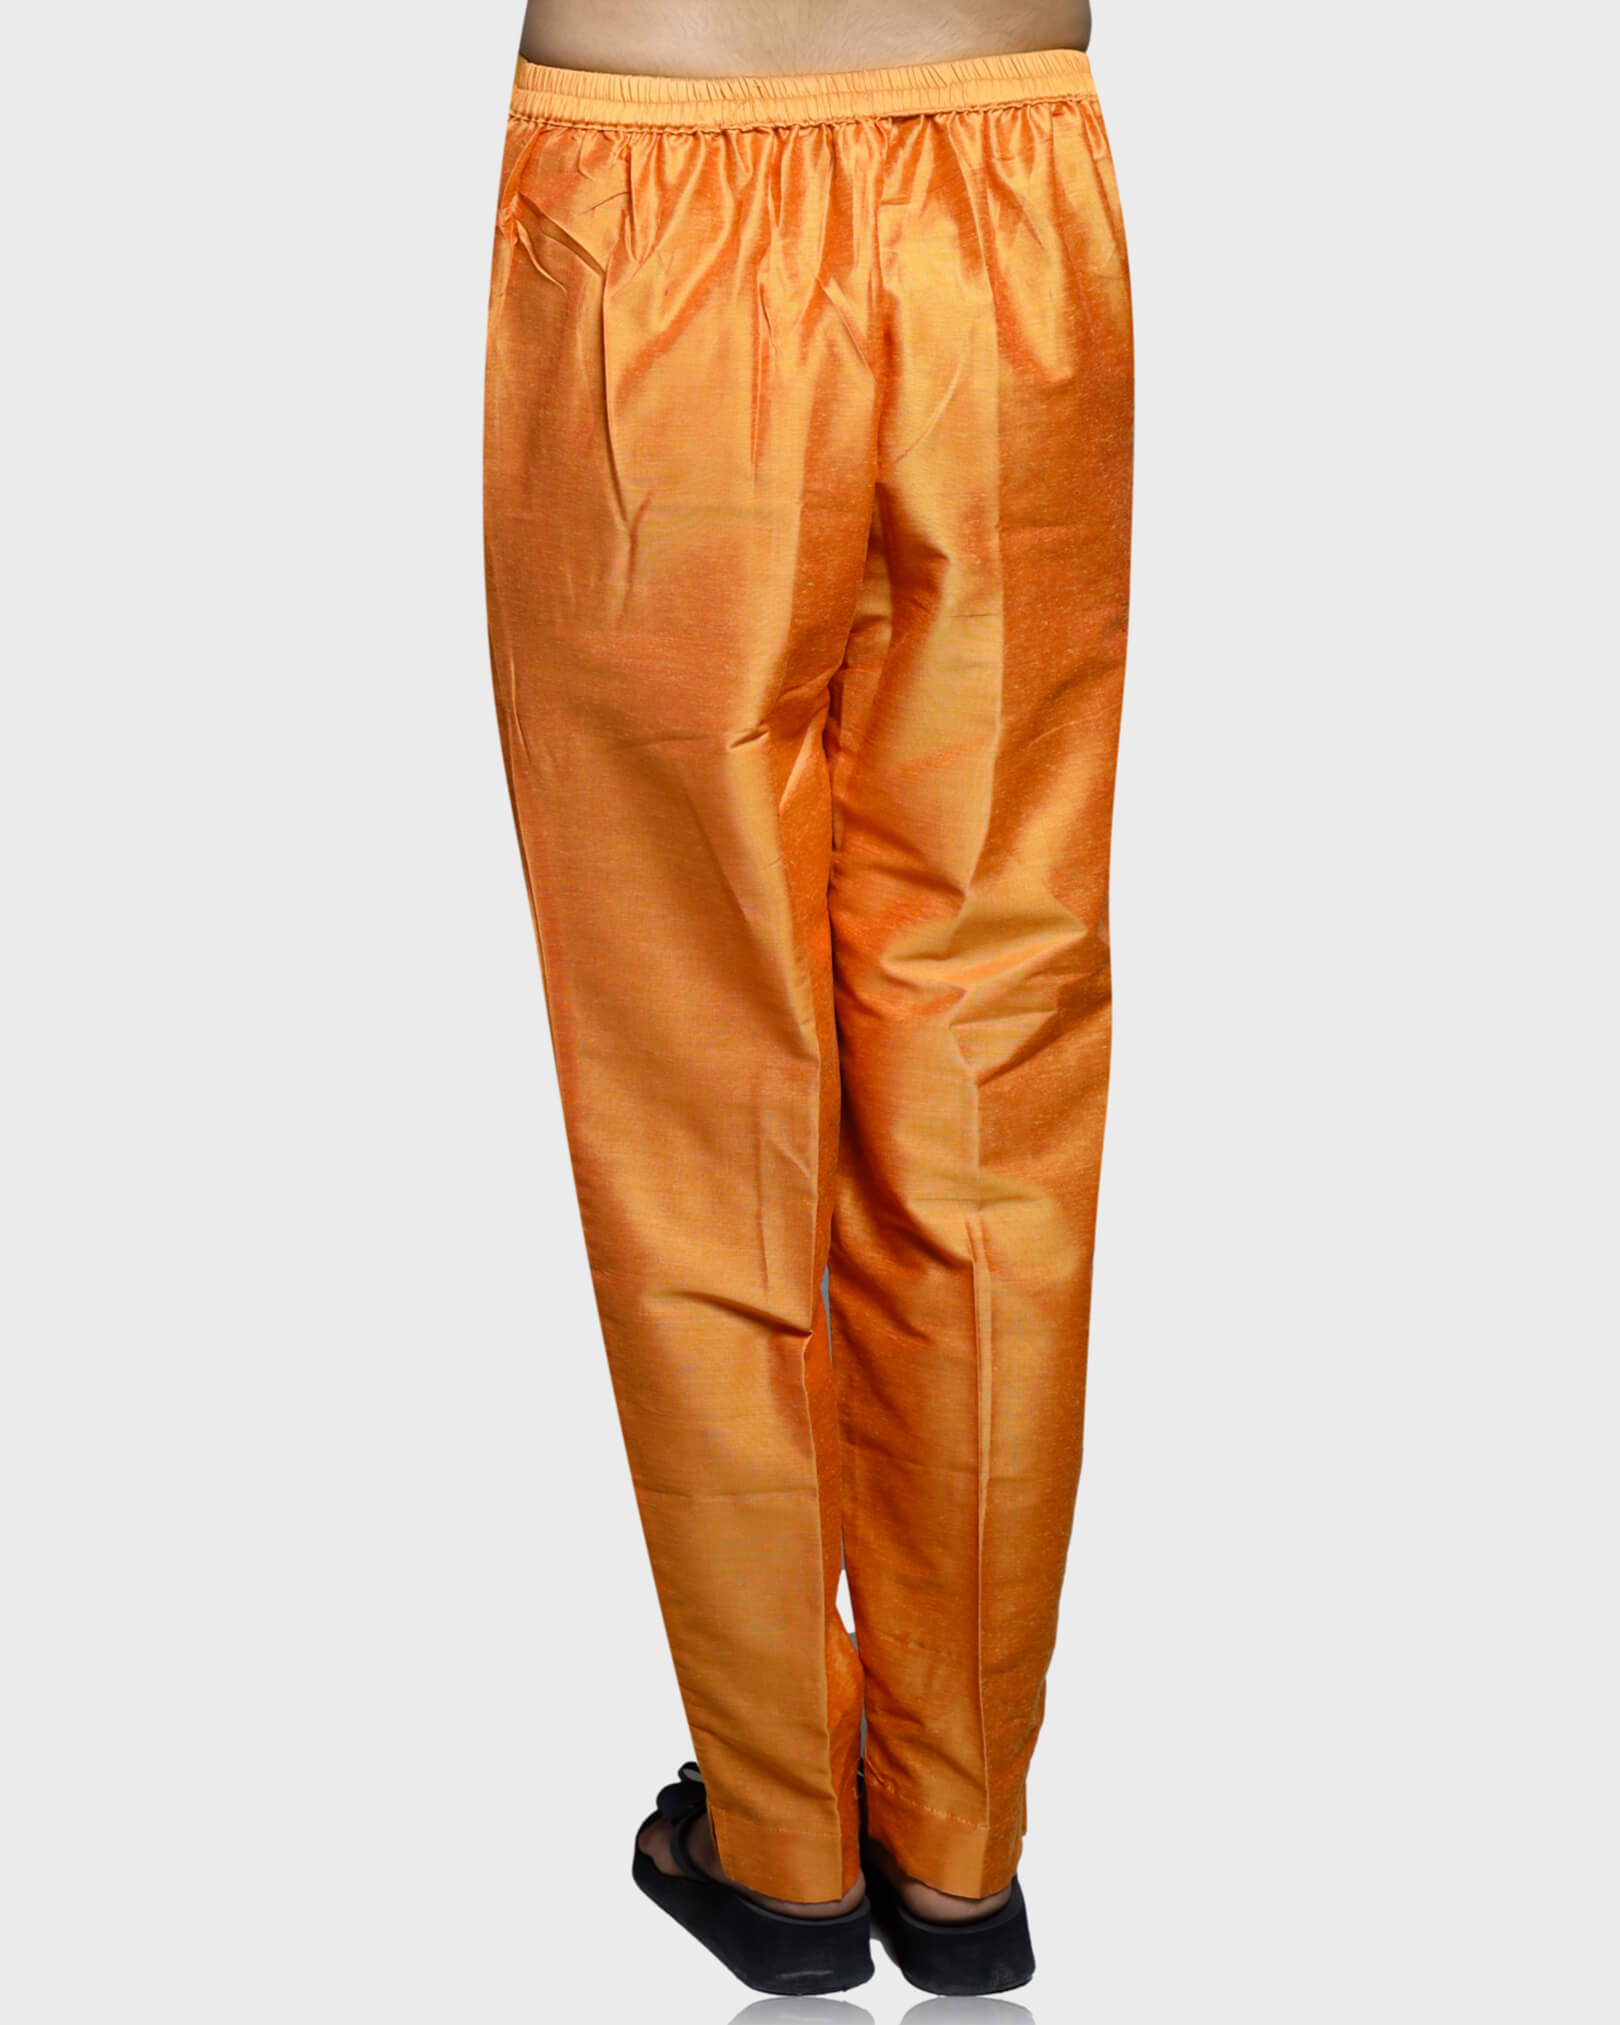 Silkfab Women's Banarasi Silk Orange Gold Solid Kurti Pant Set - SILKFAB